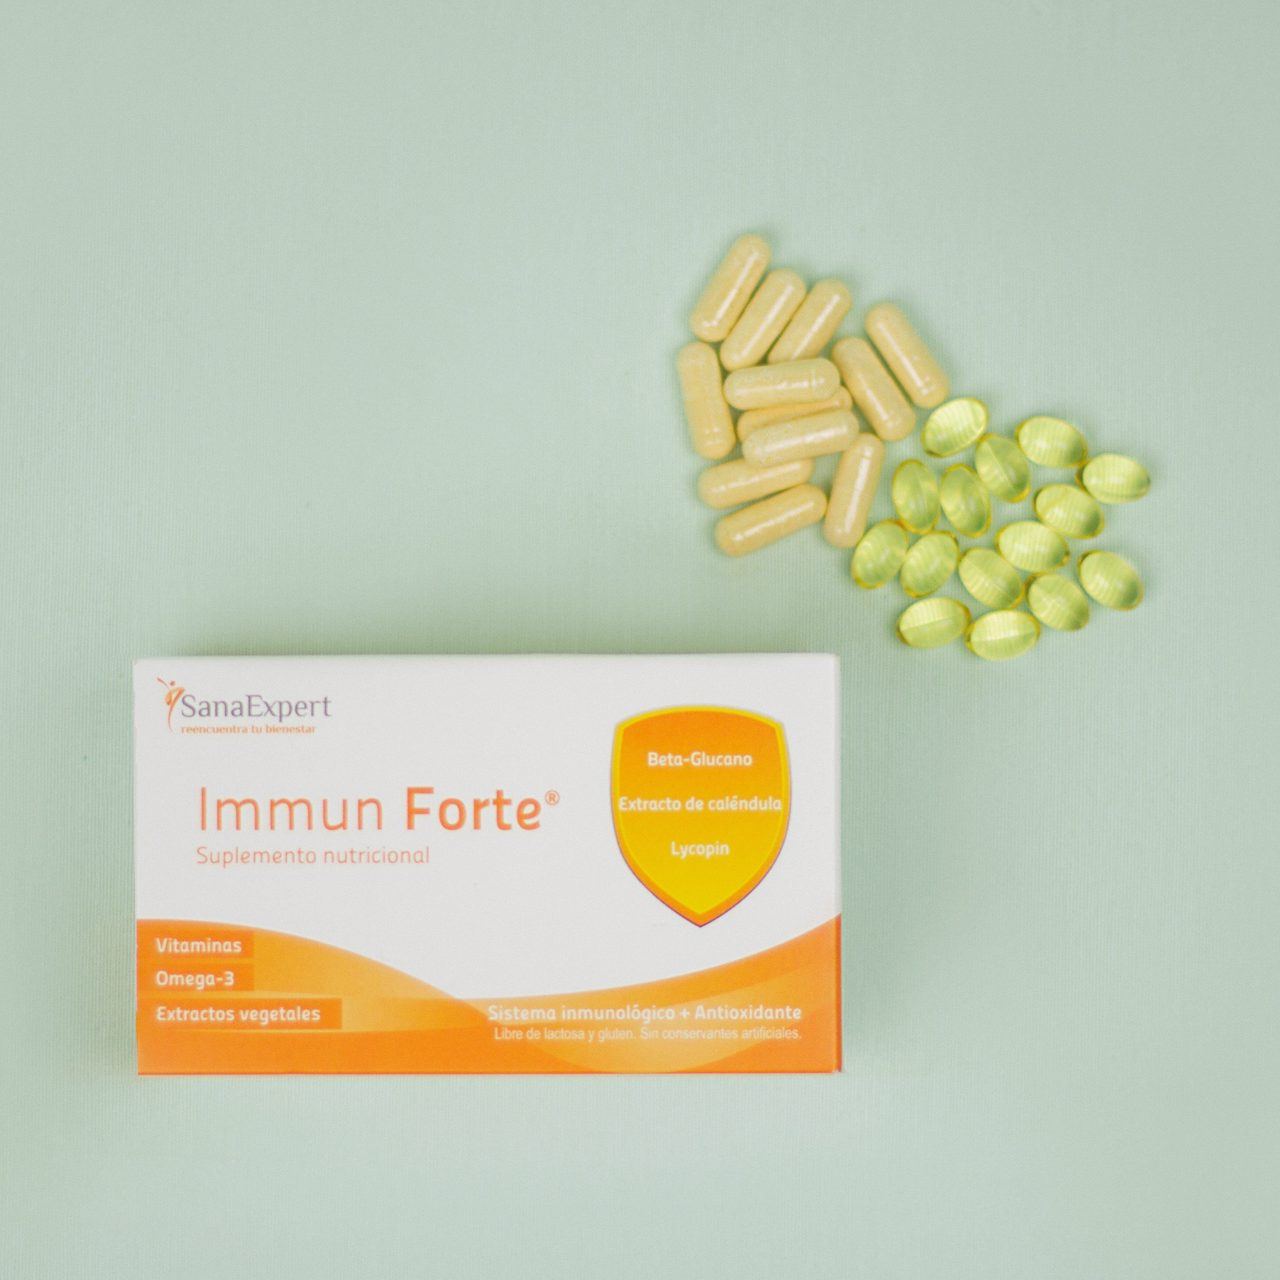 SanaExpert Immun Forte capsule